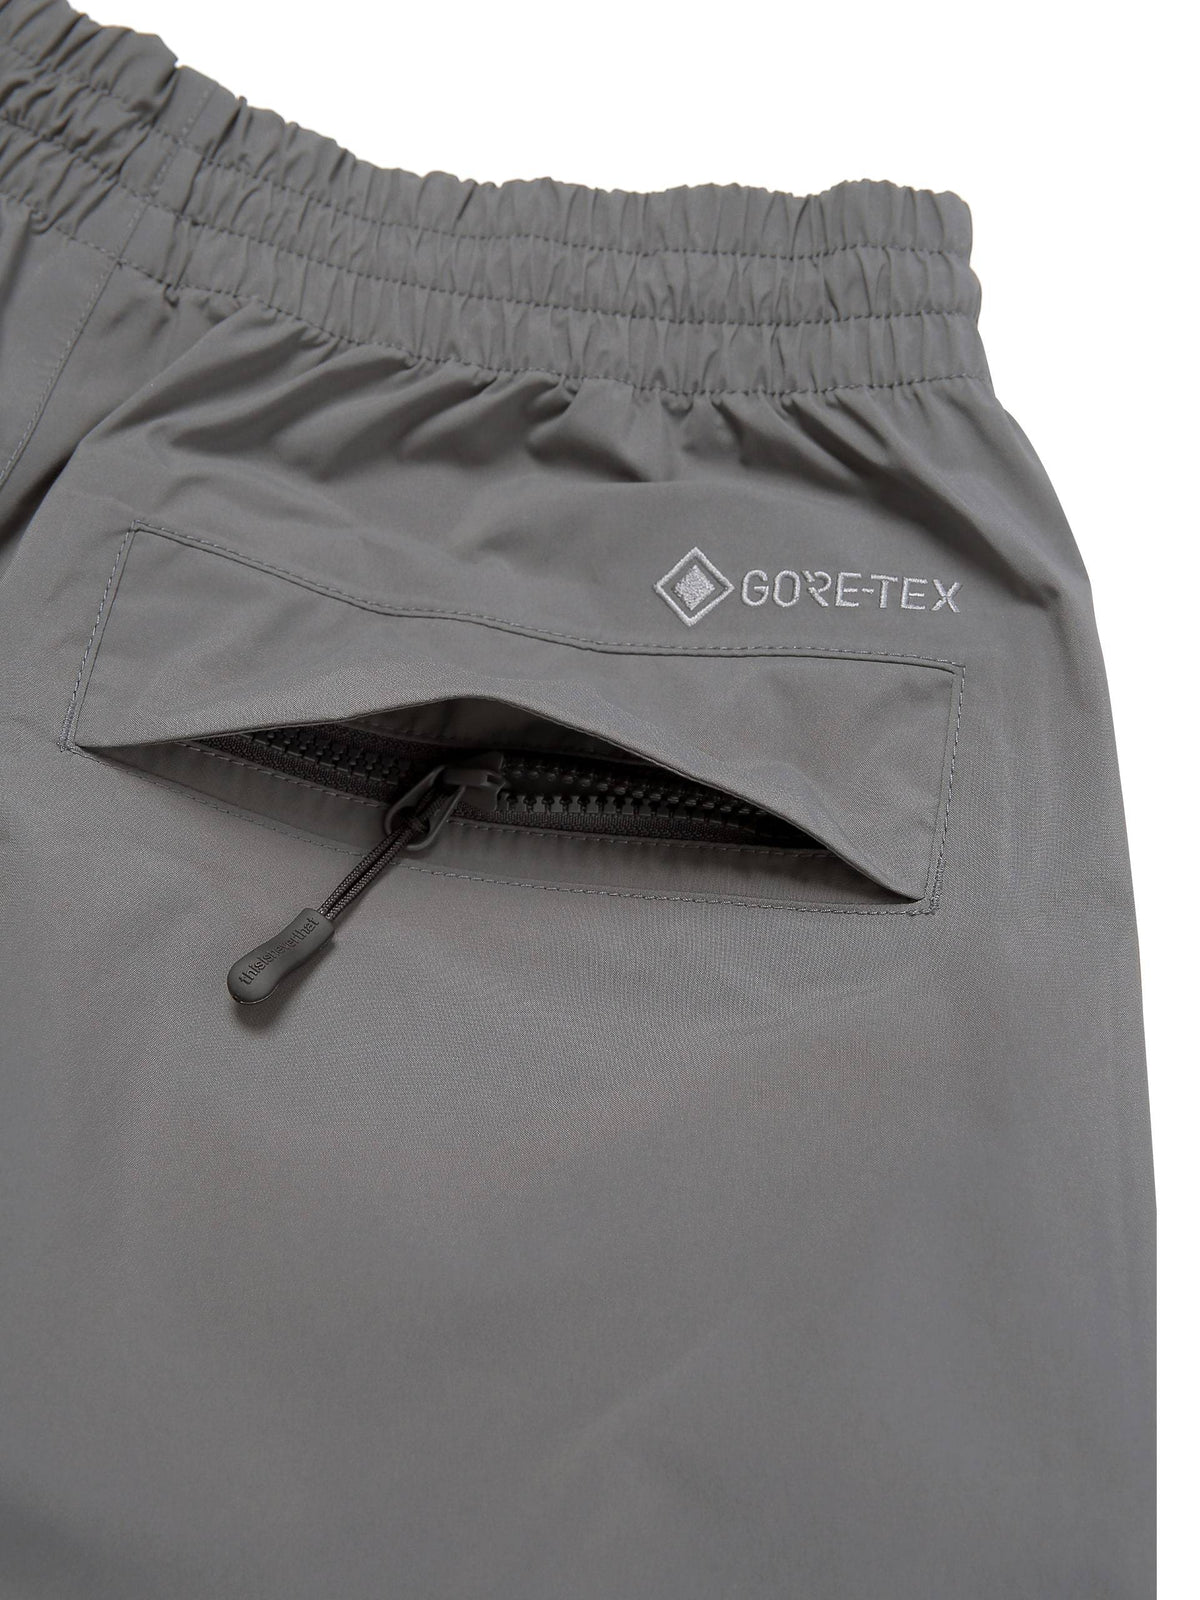 GORE-TEX Paclite Pant Pants 